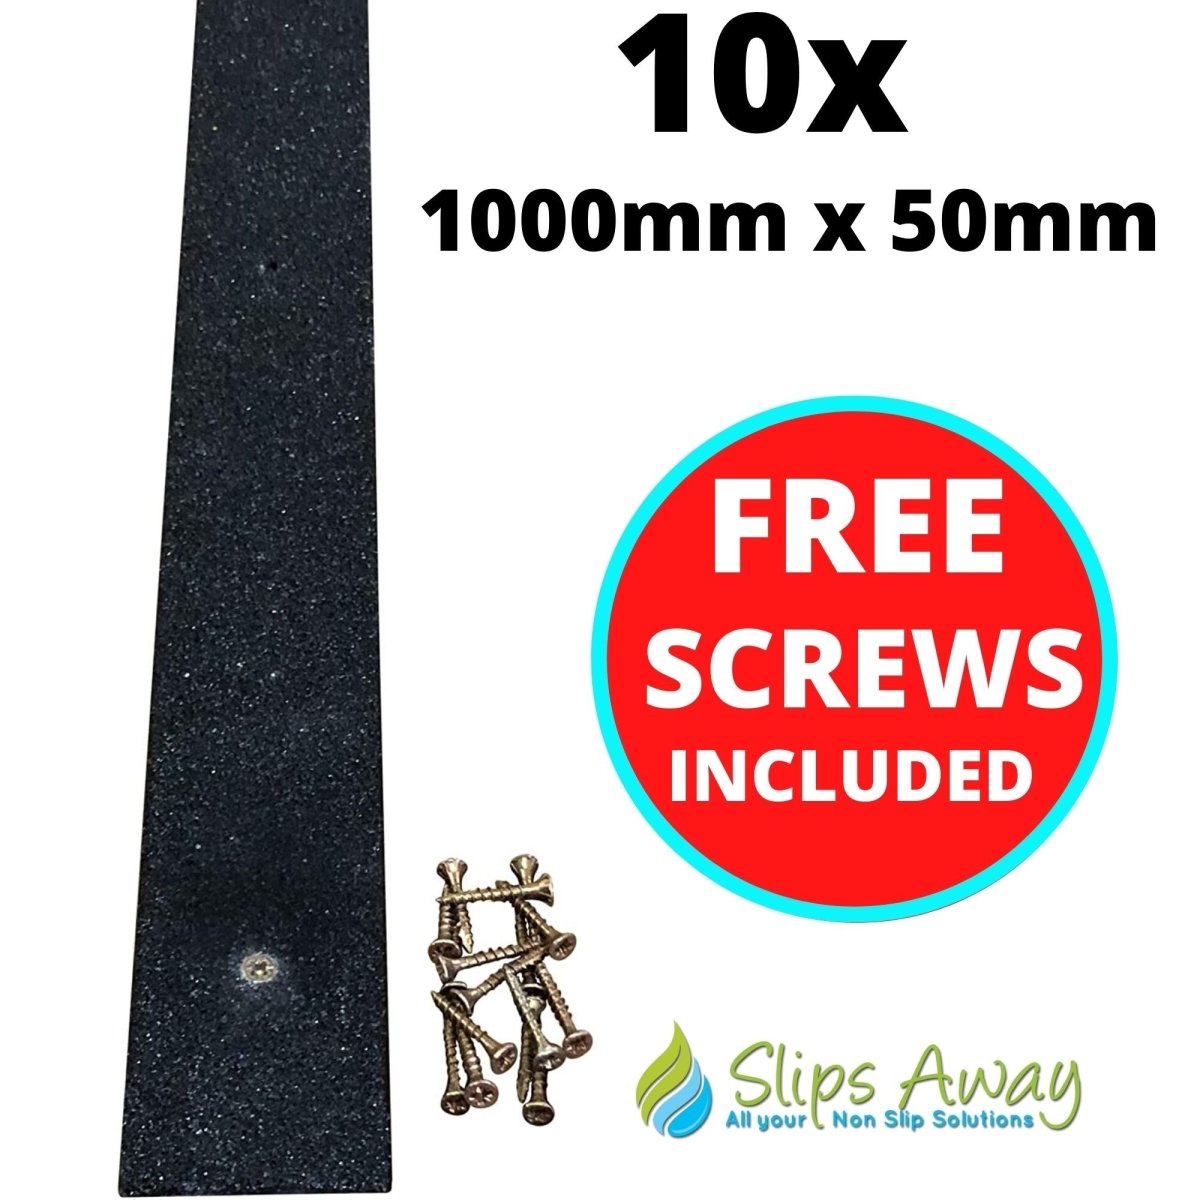 Black Non Slip Decking Strips - Slips Away - decking strip black 1000mm x 50mm 10x pack -